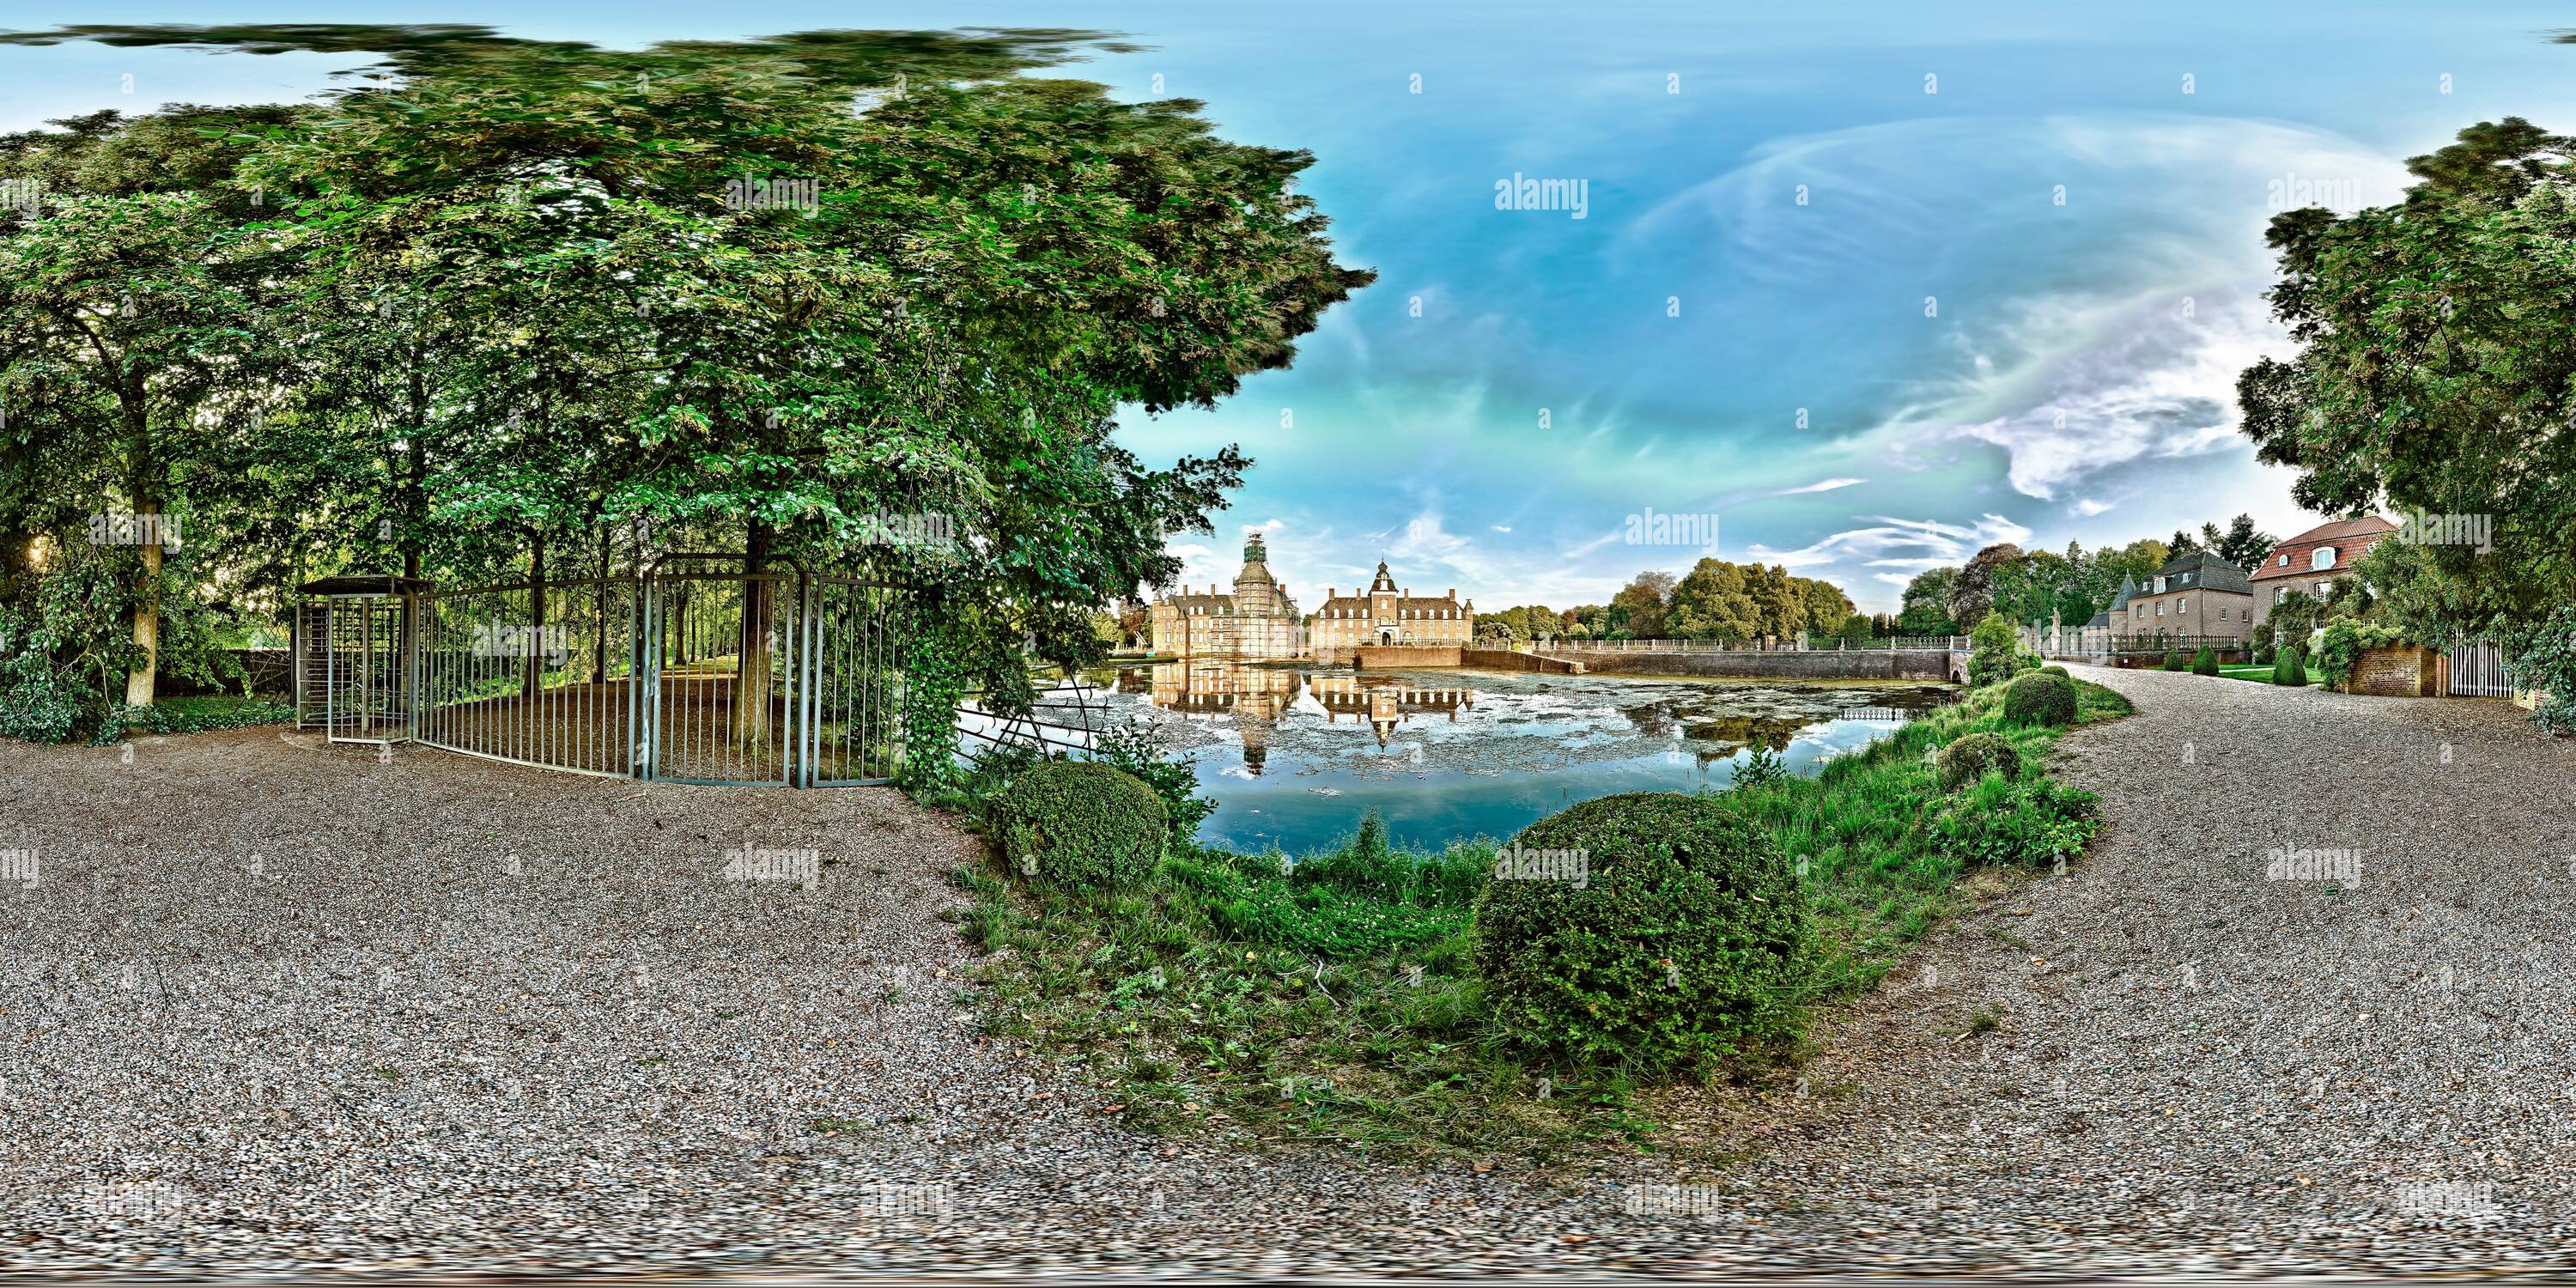 Visualizzazione panoramica a 360 gradi di Wasserschloss Anholt - Ausgang Schlosspark